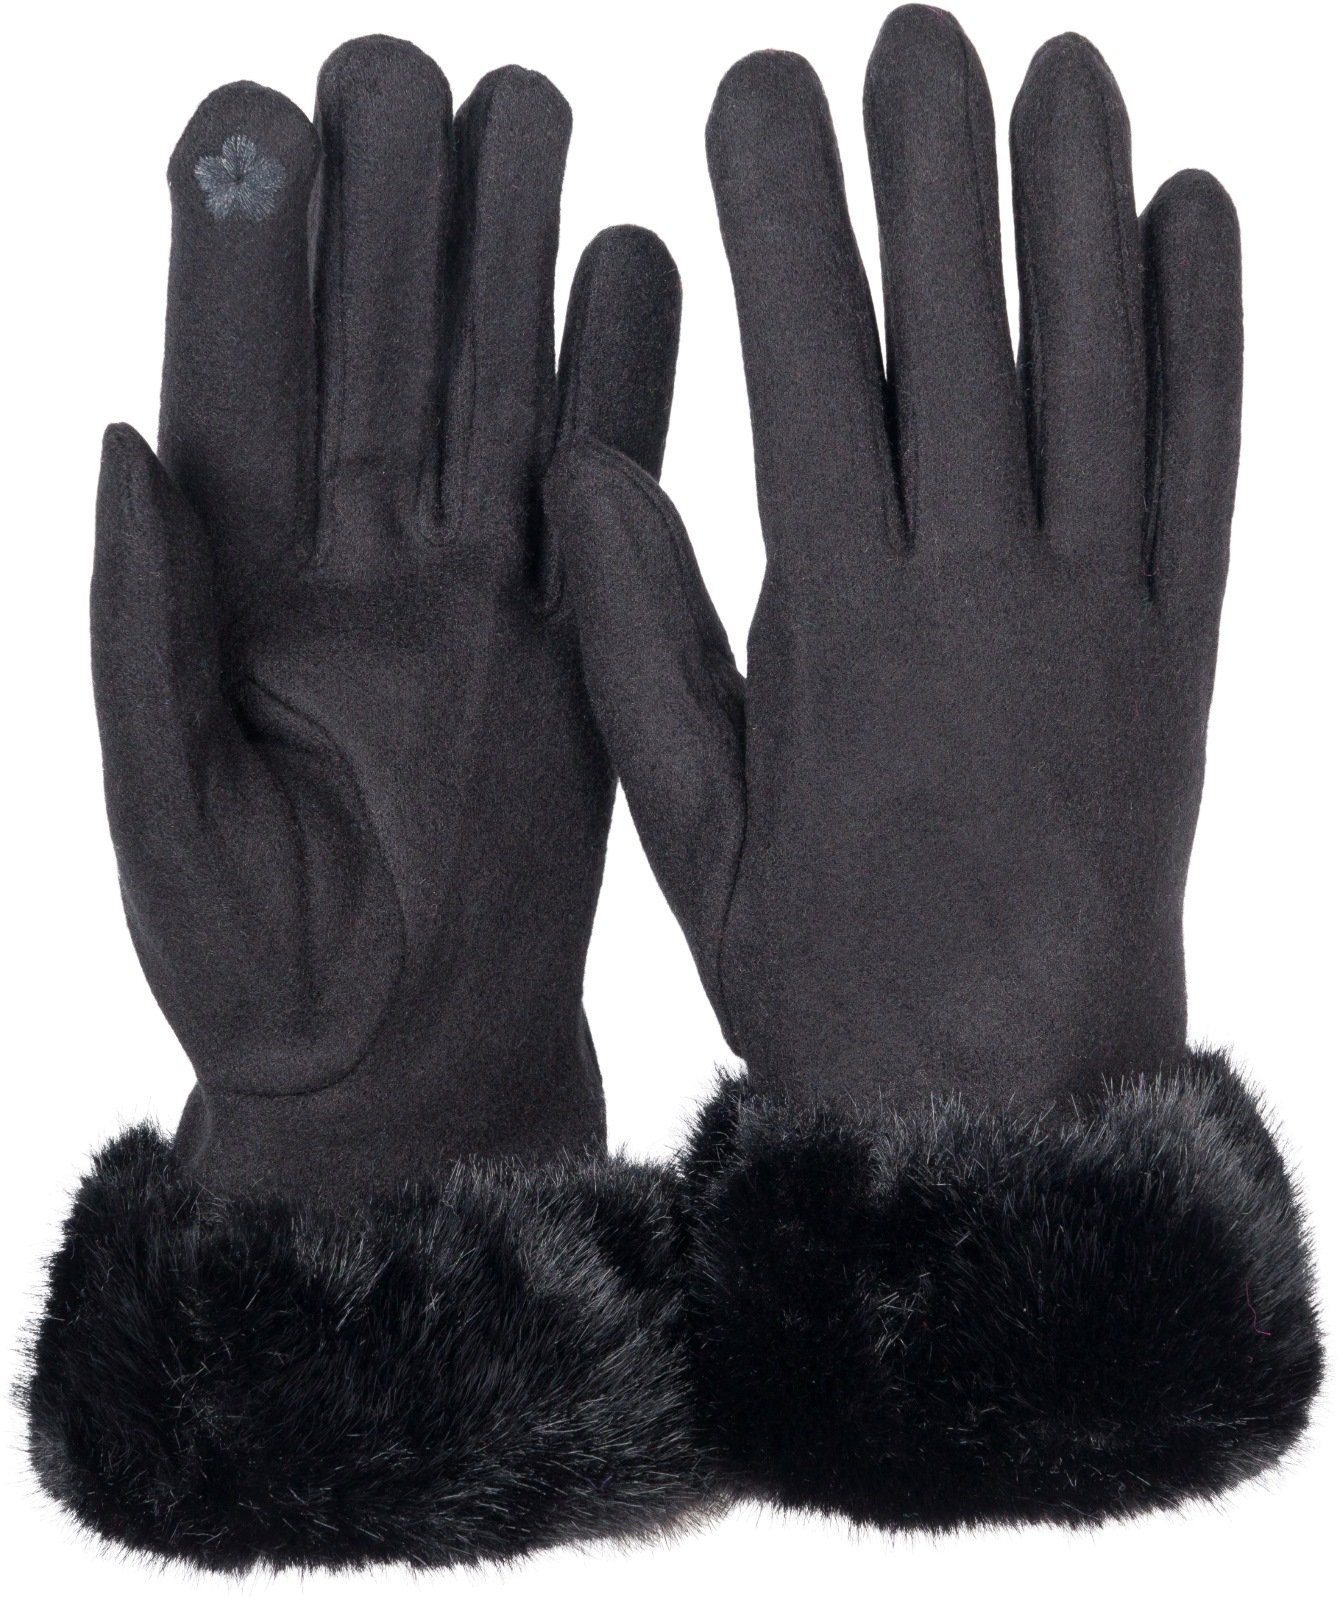 styleBREAKER Fleecehandschuhe Unifarbene Touchscreen Handschuhe mit Kunstfell Schwarz